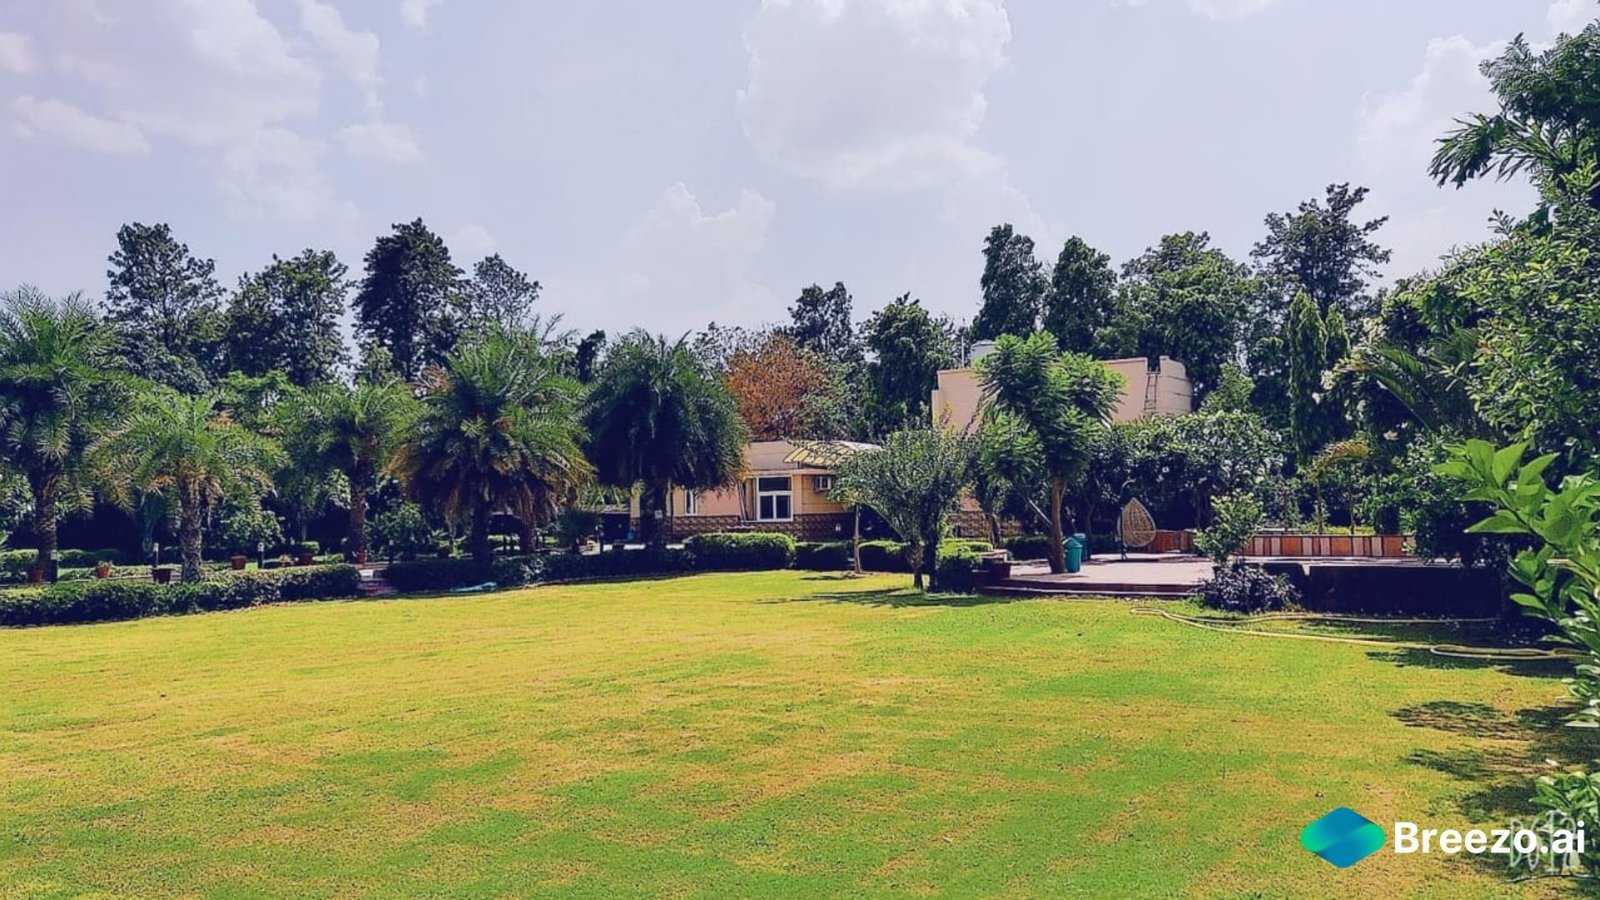 Farmhouse for film shoots in Delhi NCR, Gurgaon, and Noida - A serene poolside setting amidst lush greenery.